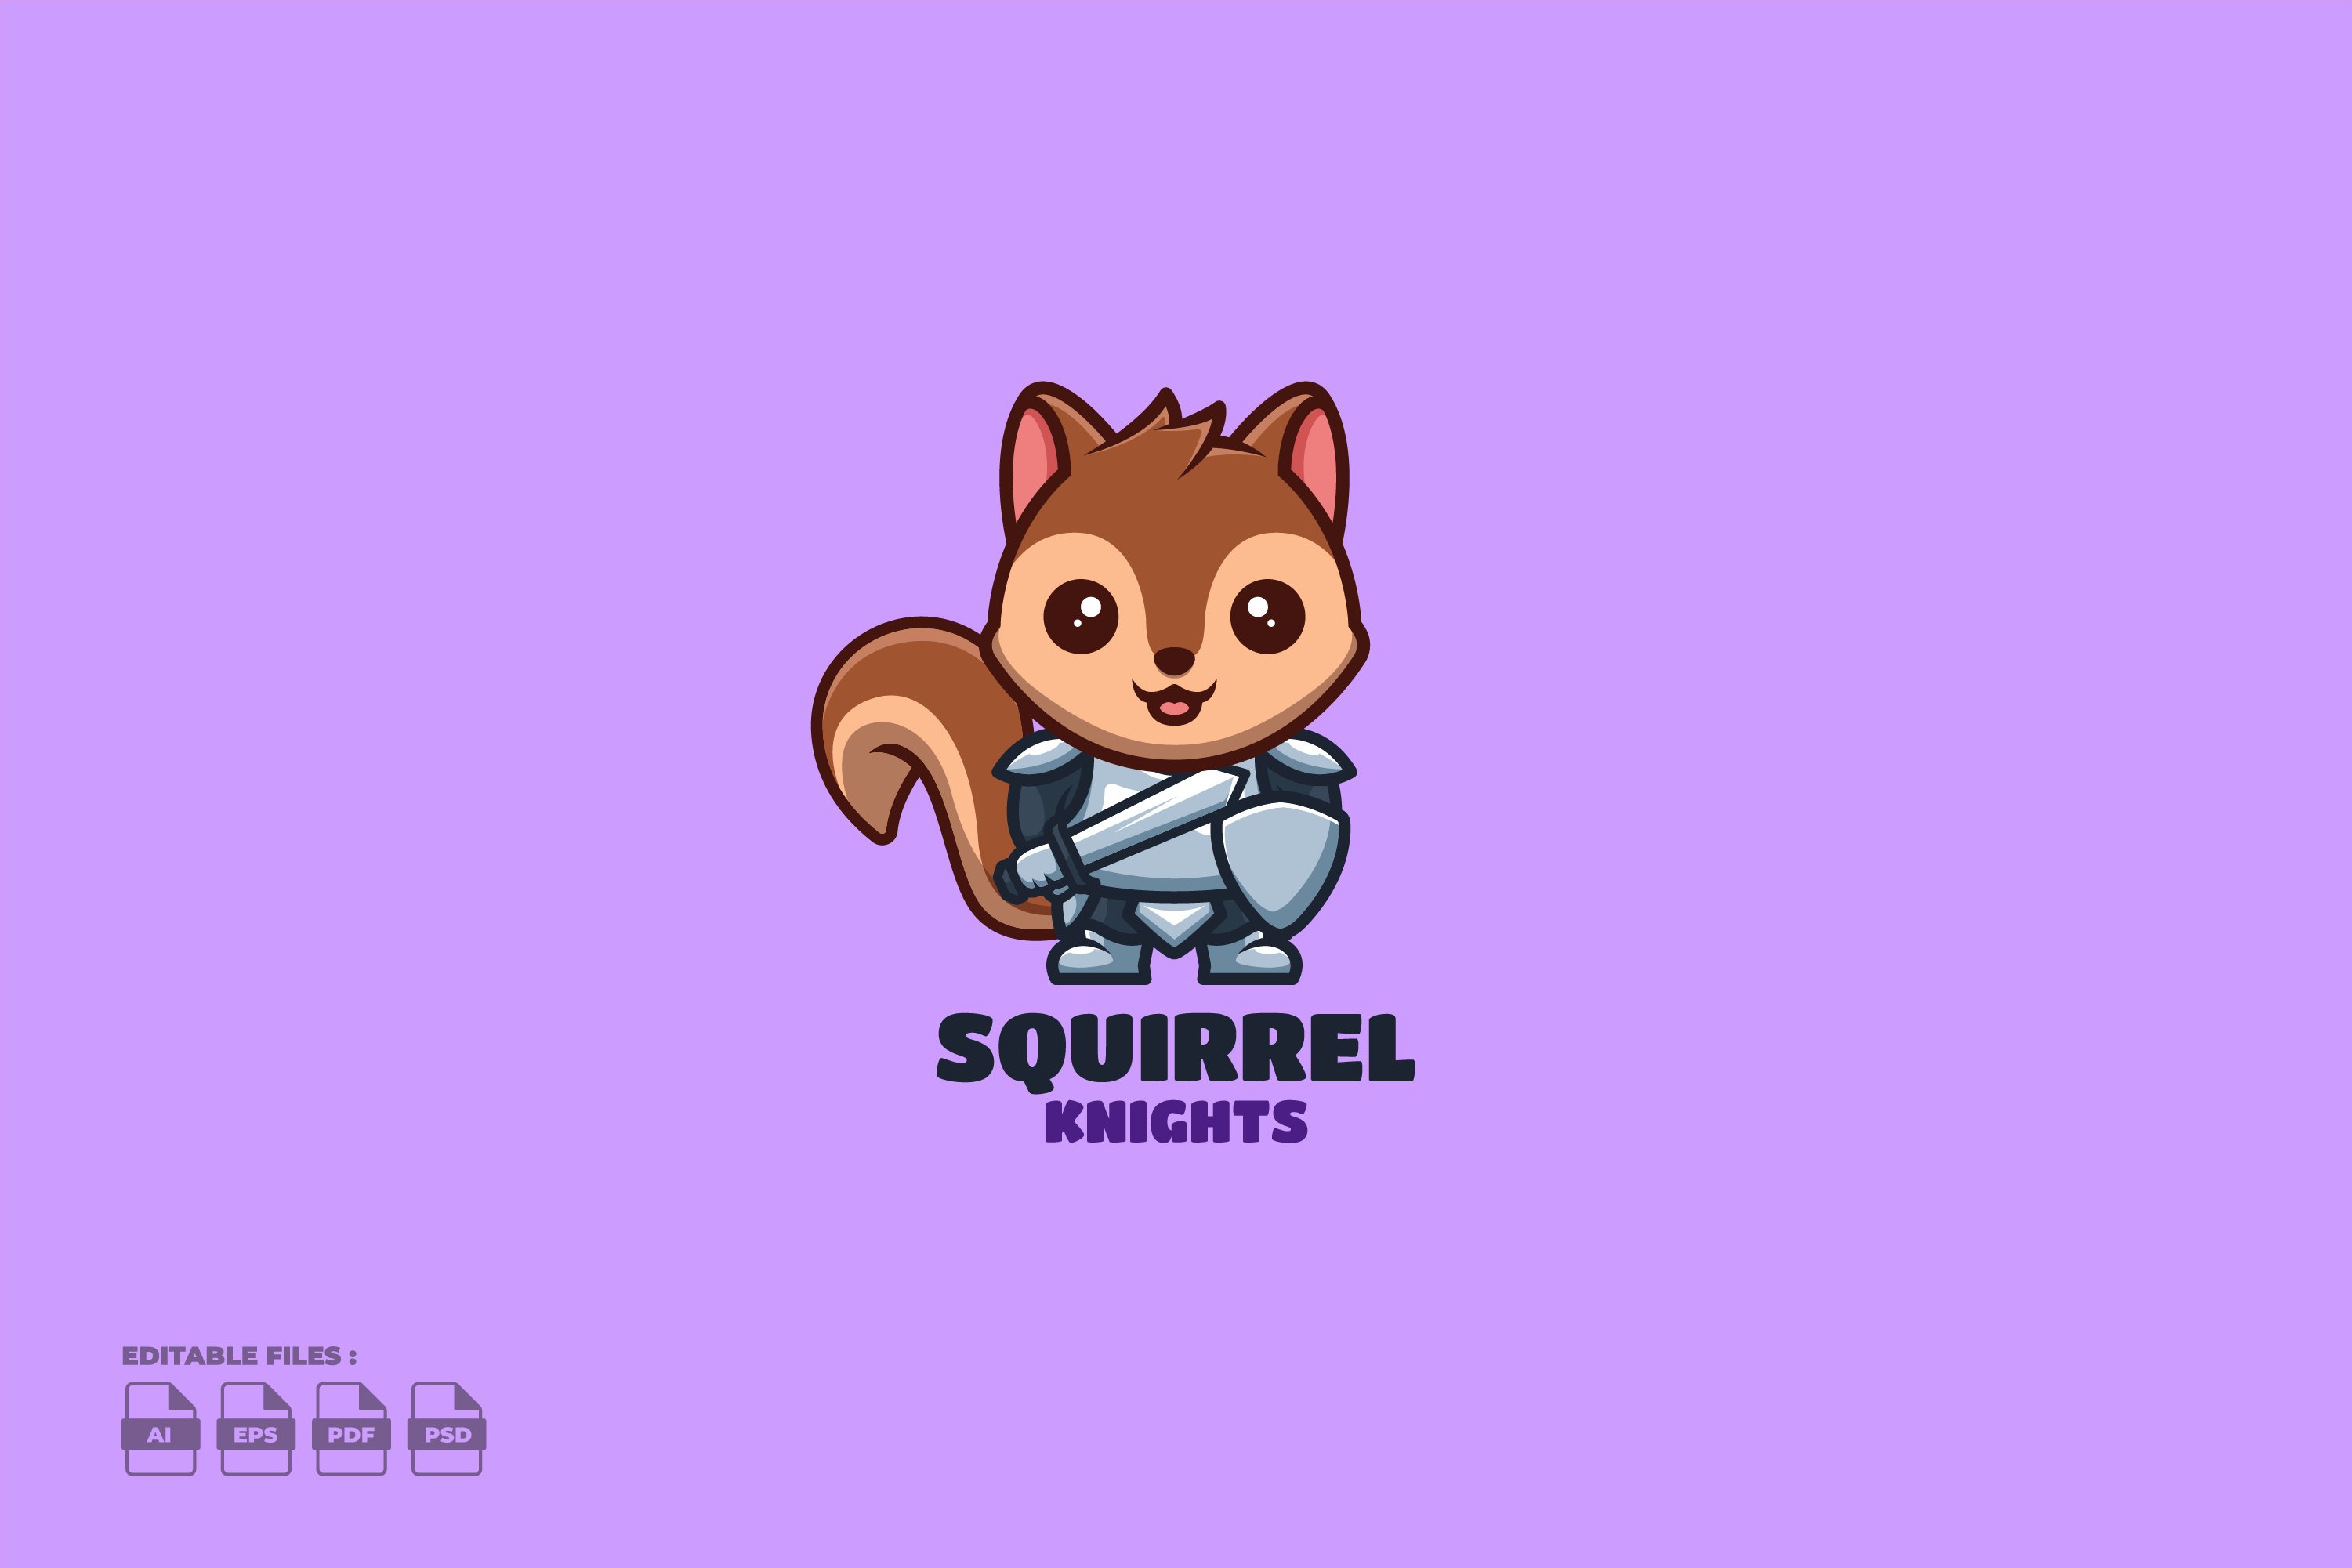 Knight Squirrel Cute Mascot Logo cover image.